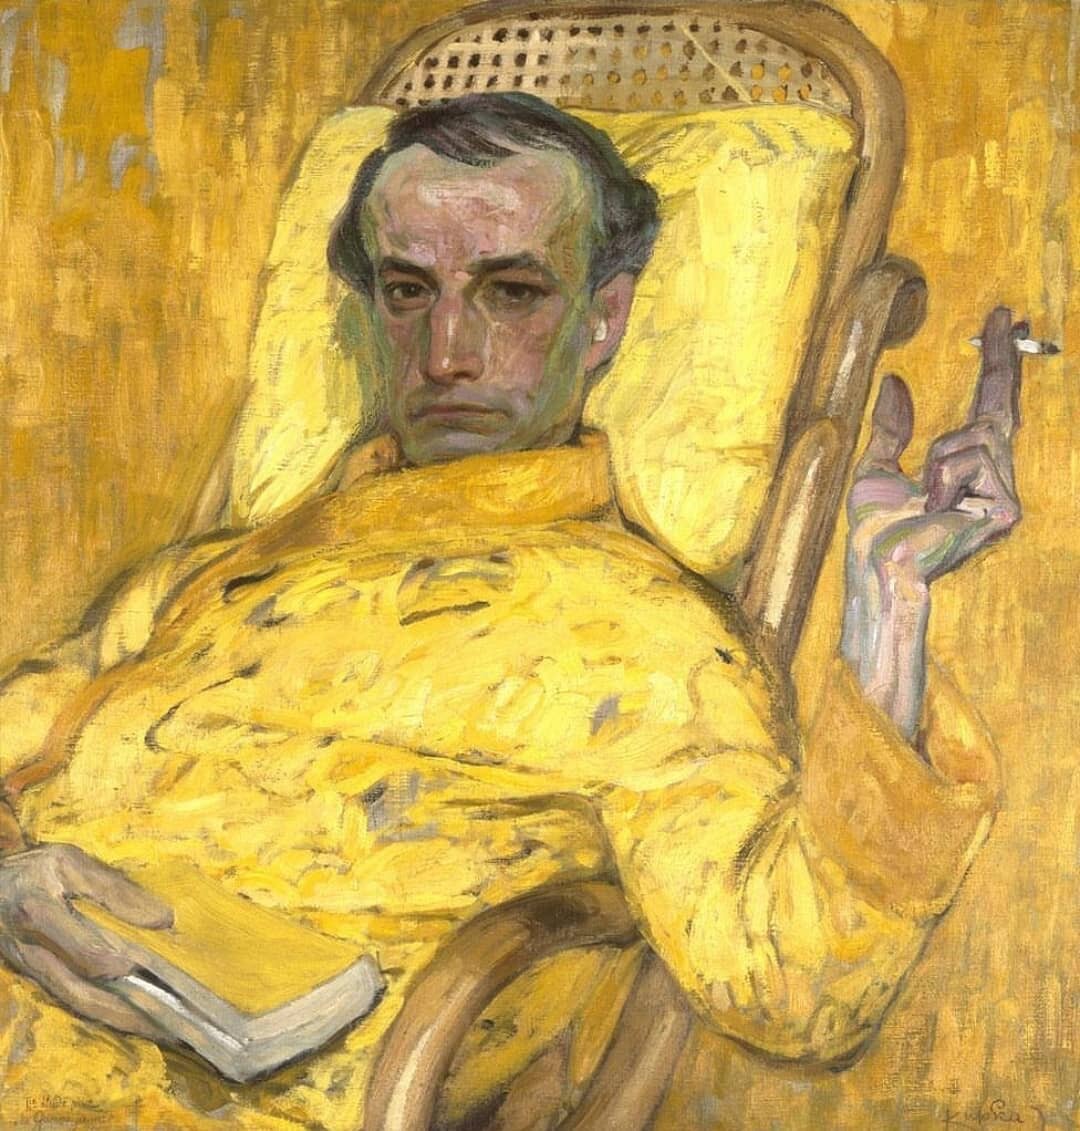 The Yellow Scale, Frantisek Kupka (circa 1907)